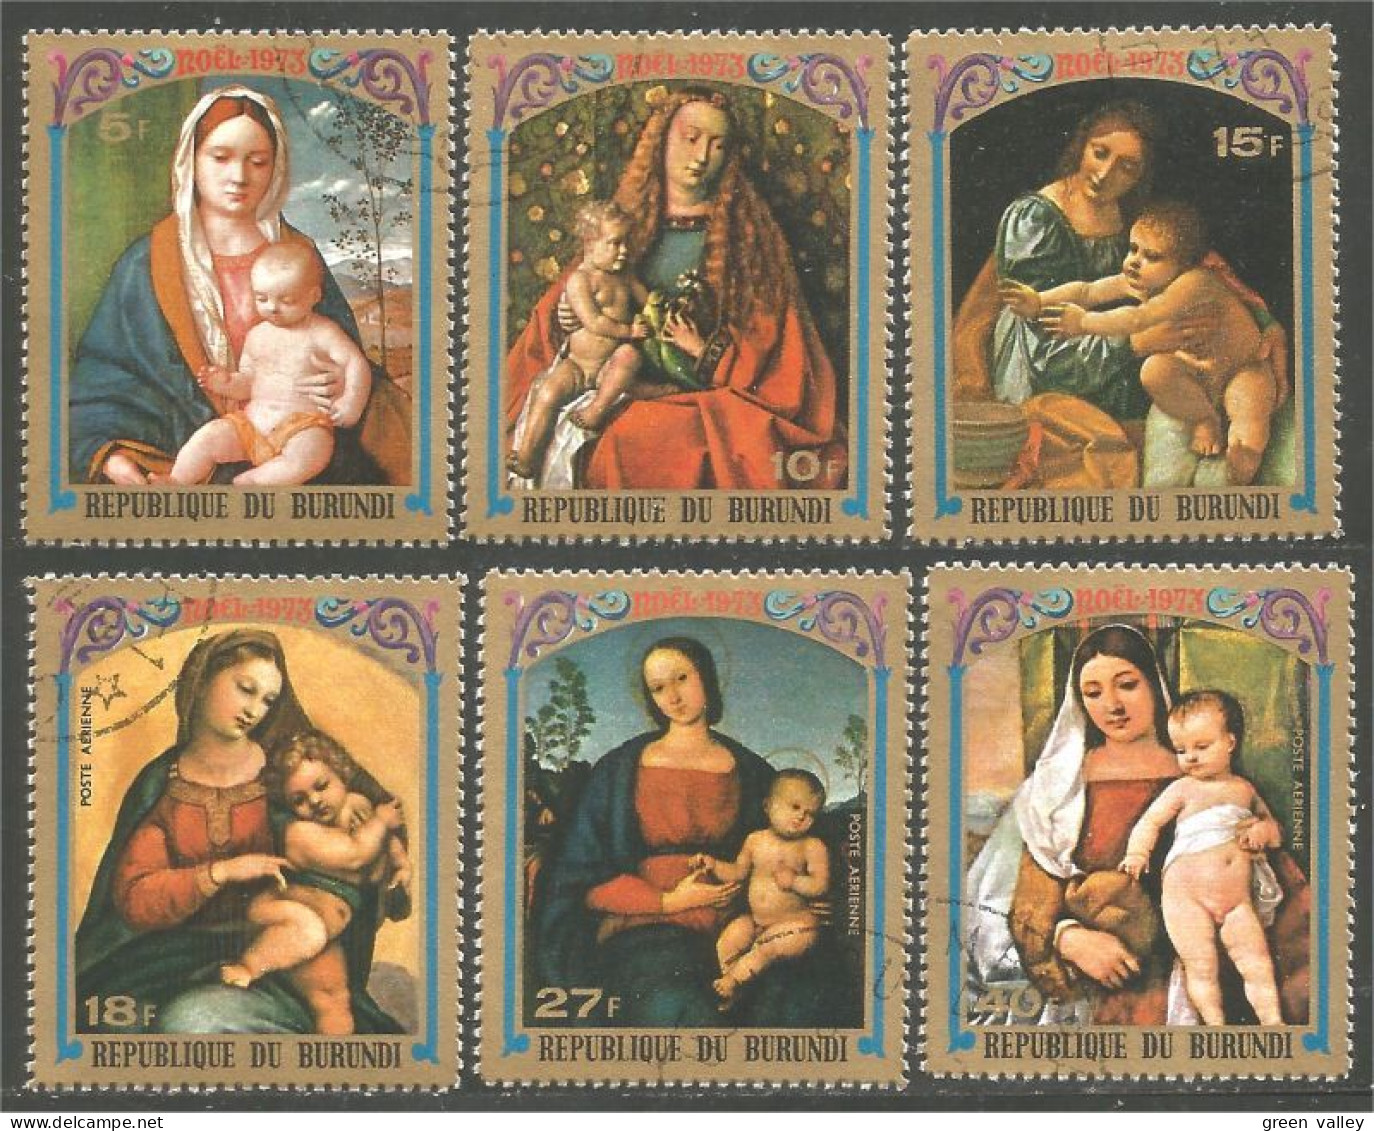 233 Burundi Raphael Memlimg Lotto Mainardi Botticelli (BUR-310) - Religious